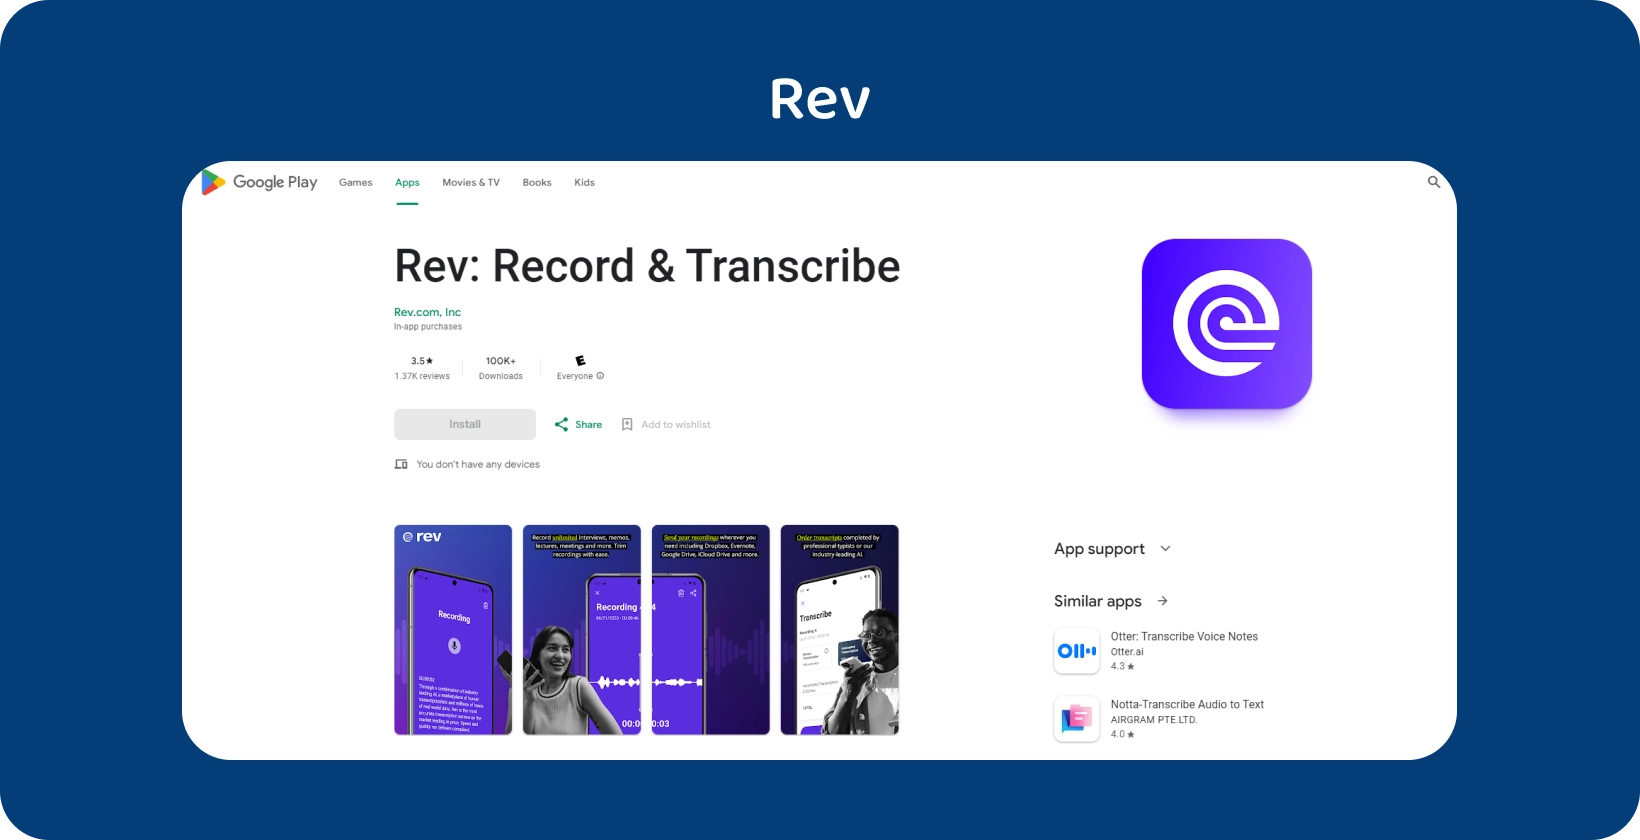 Google Play Store תצוגה של האפליקציה Rev, תוך הדגשת תכונות להקלטה ותמלול במכשירי Android.